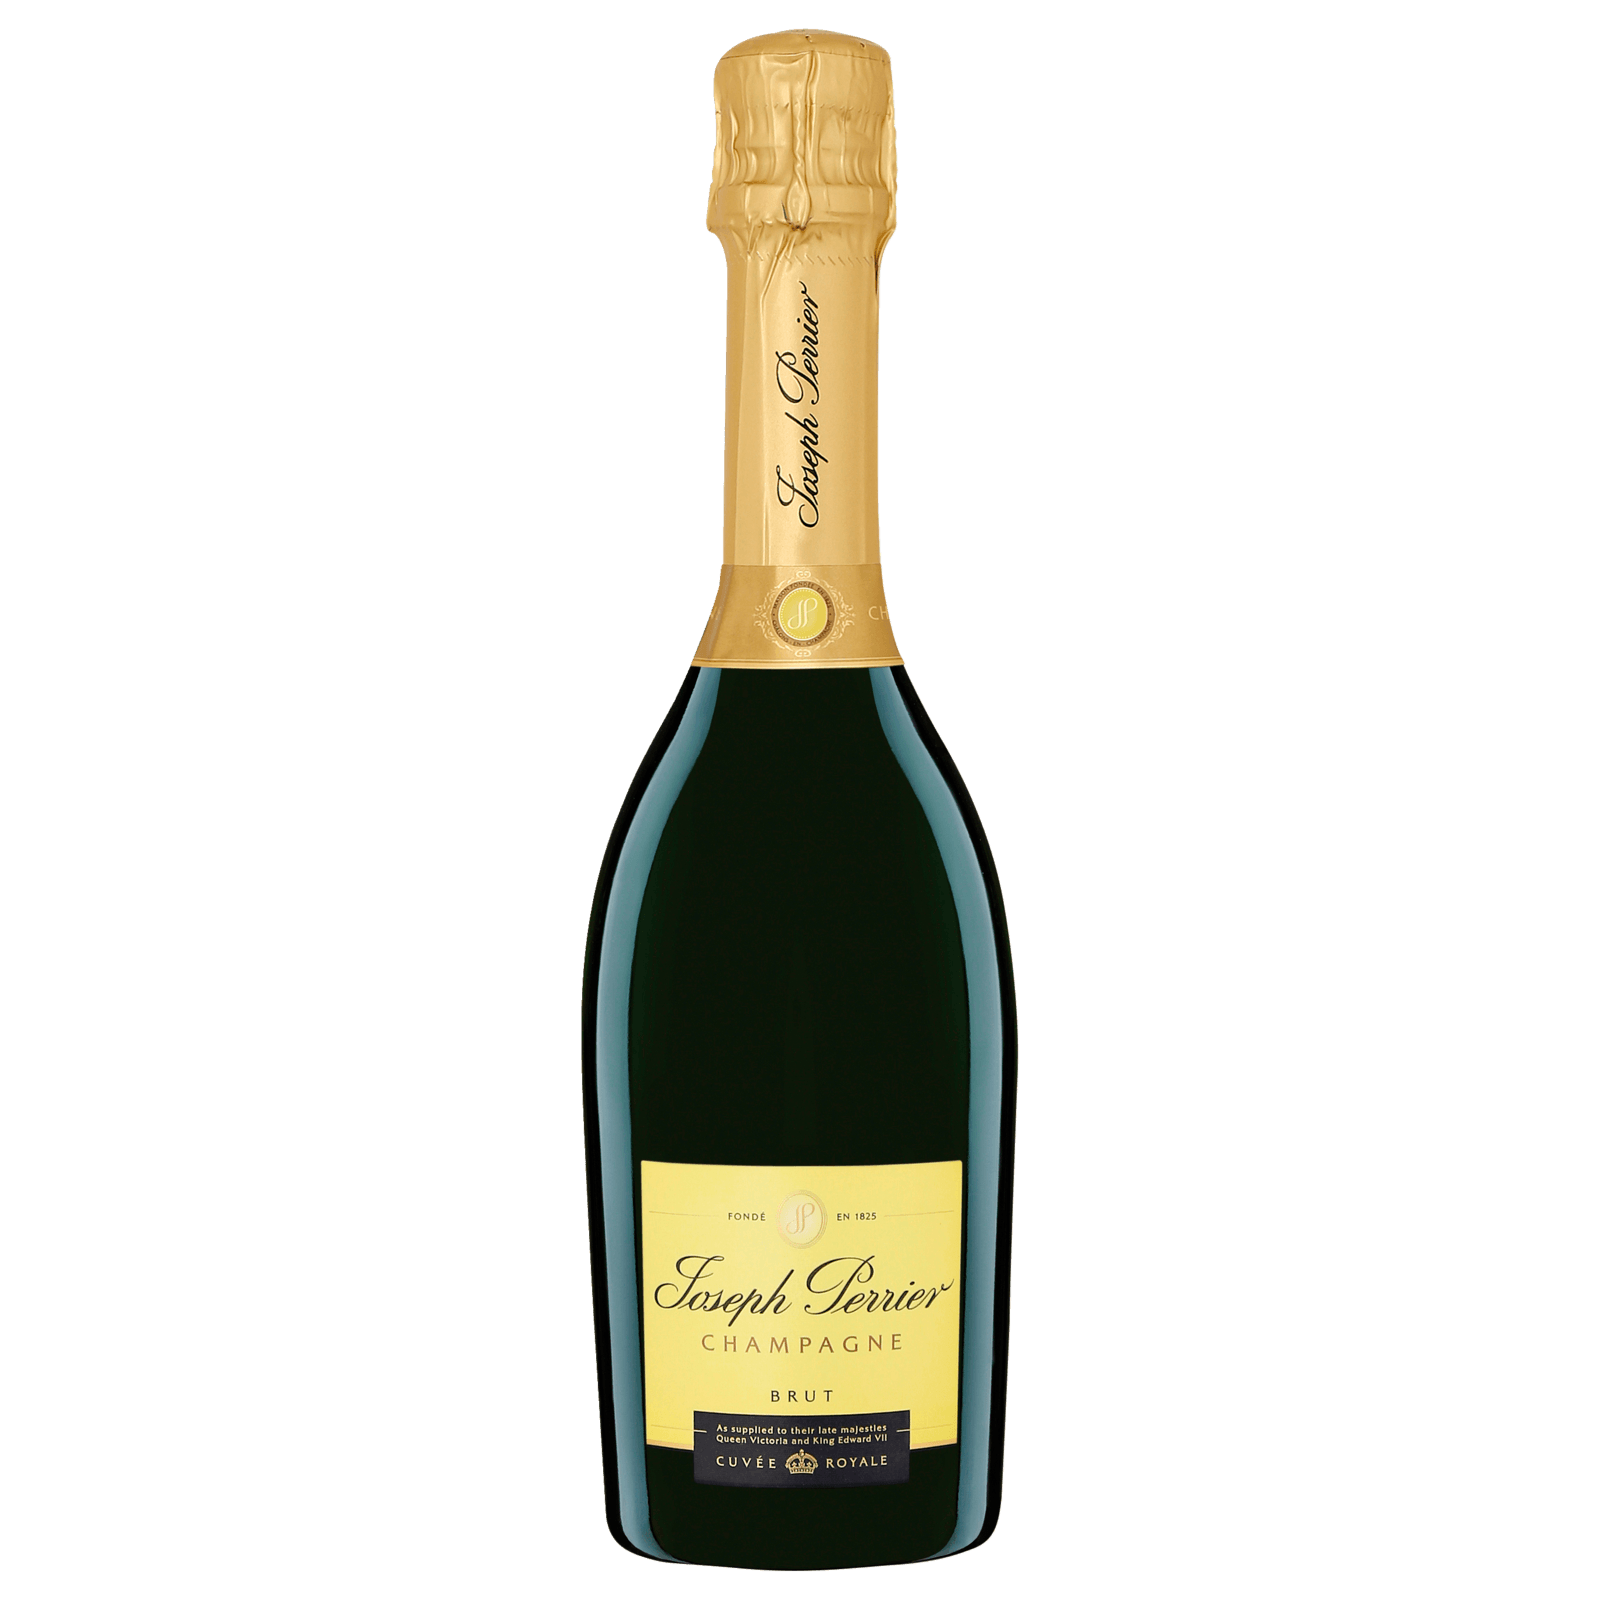 Champagne Chanoine Héritage 1730 Cuvée brut, Champagner für 22,99€ von Lidl